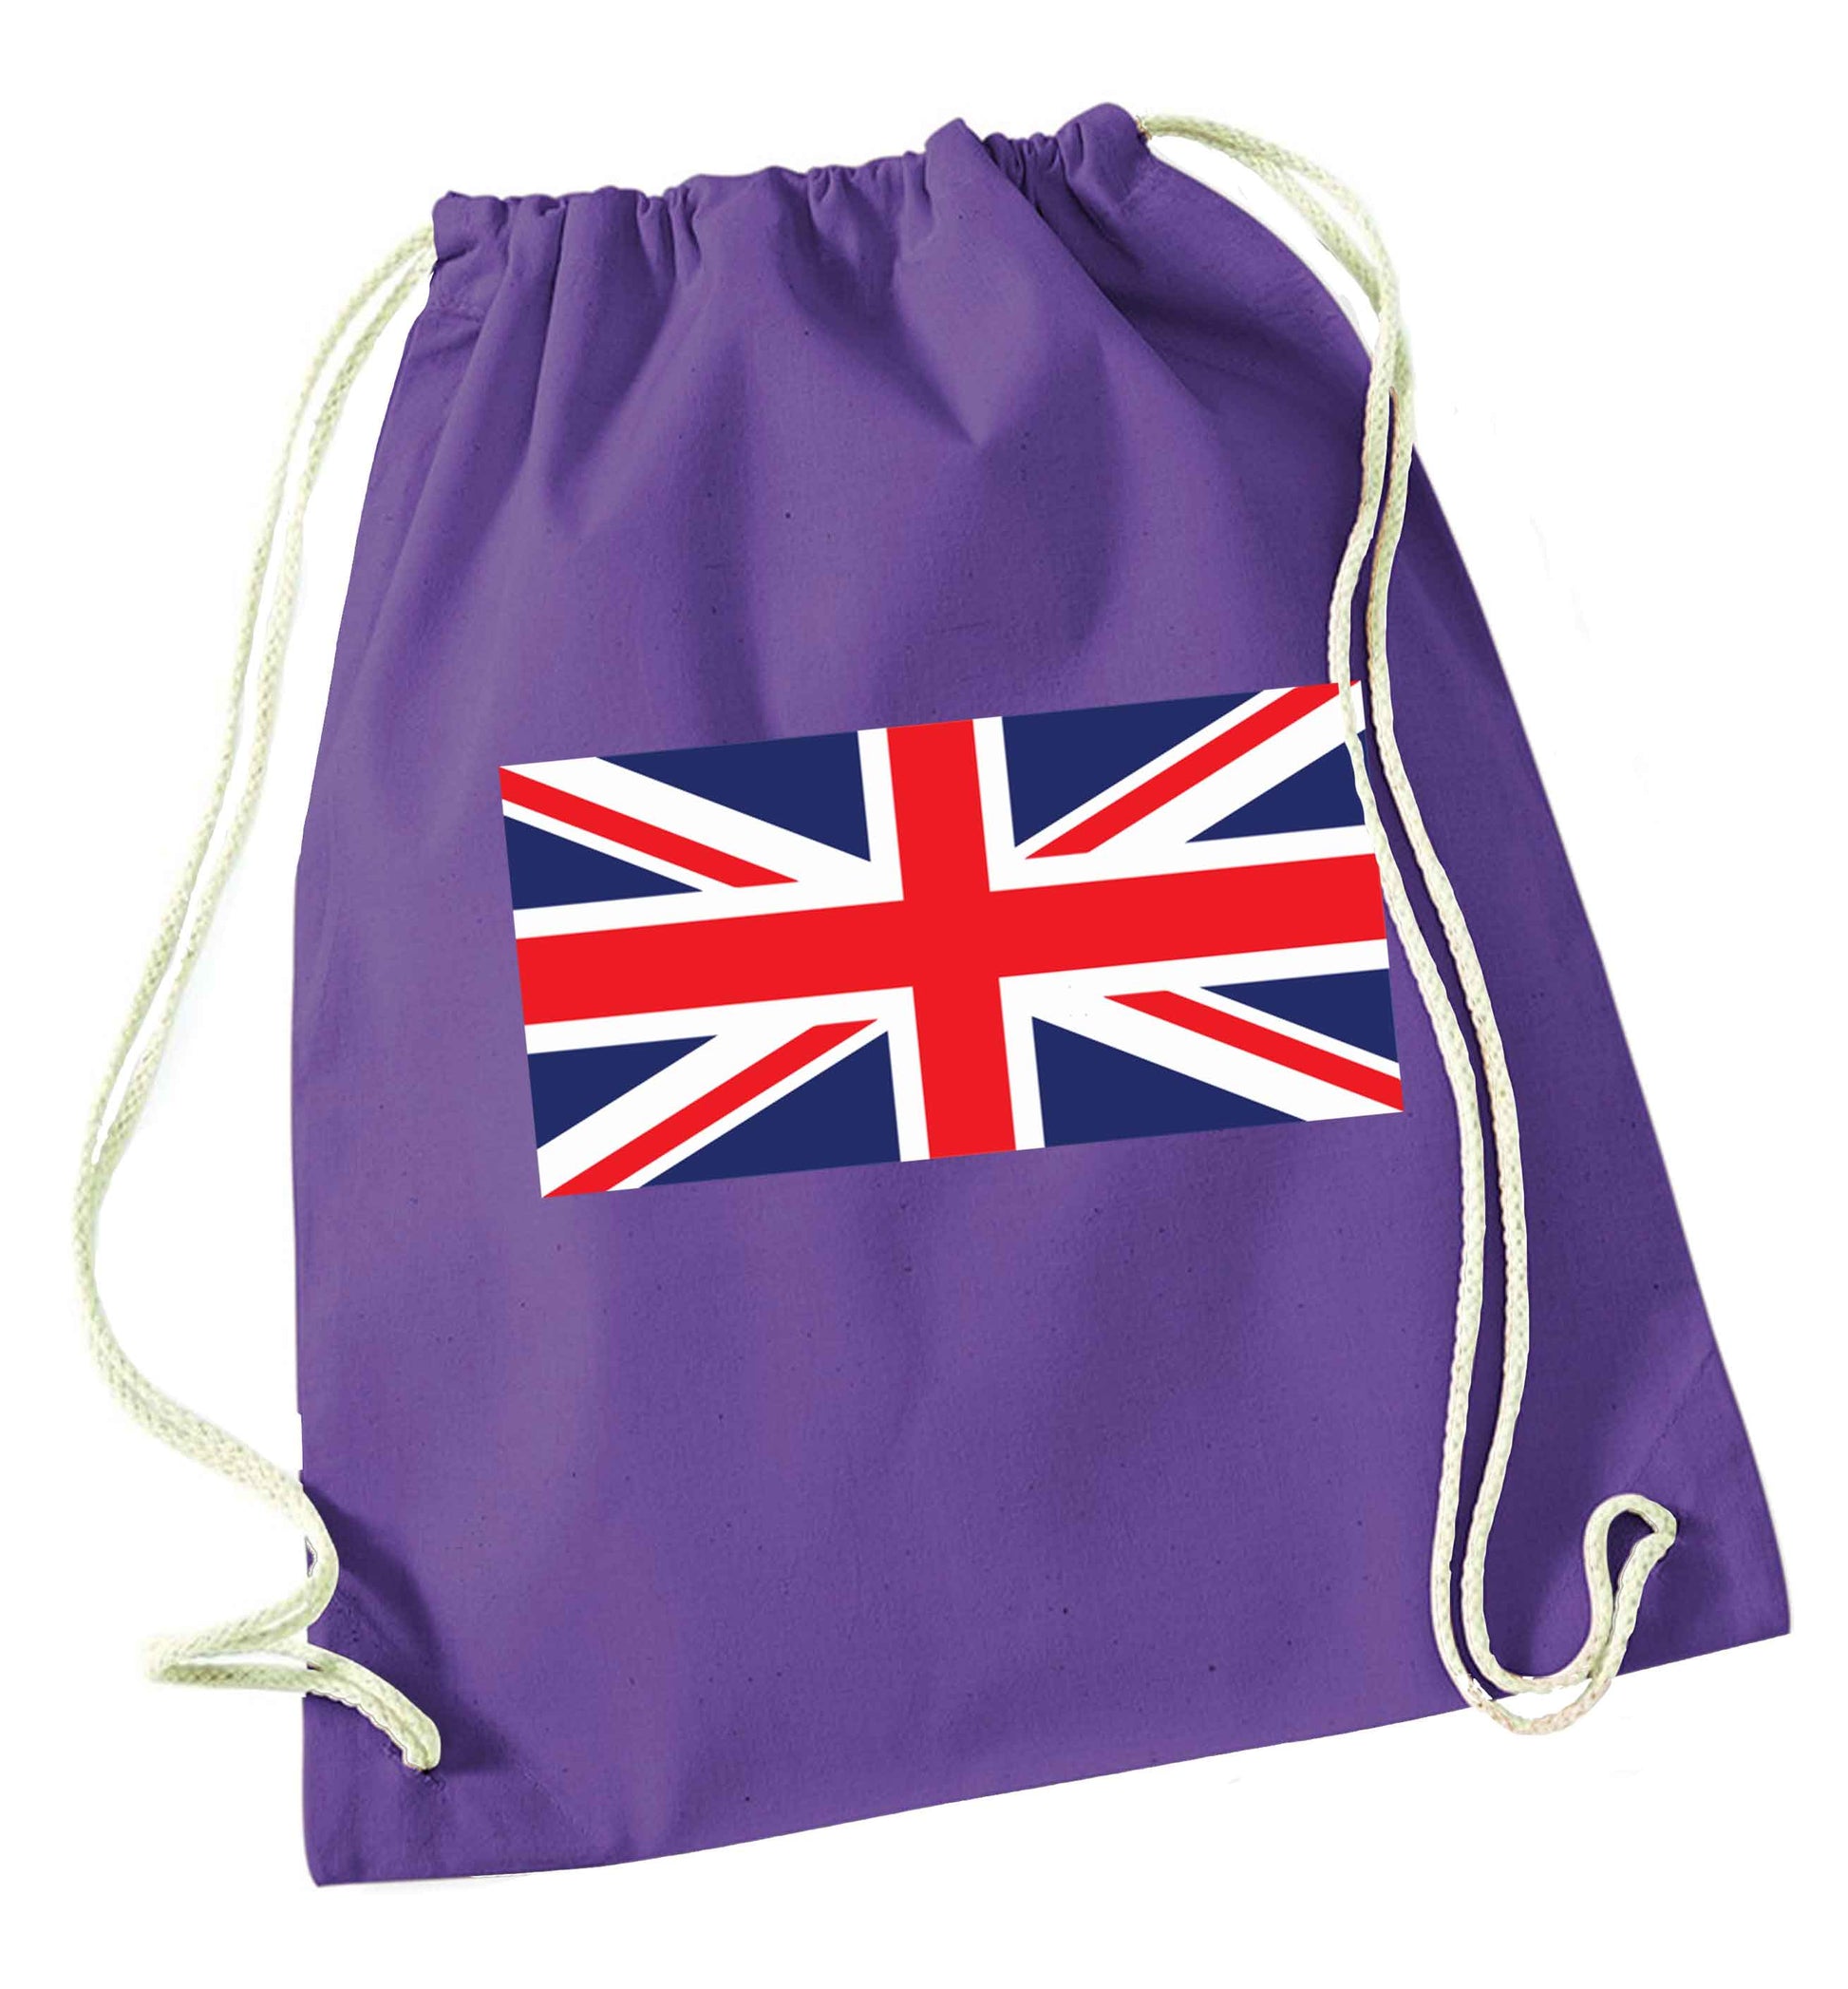 Union Jack purple drawstring bag